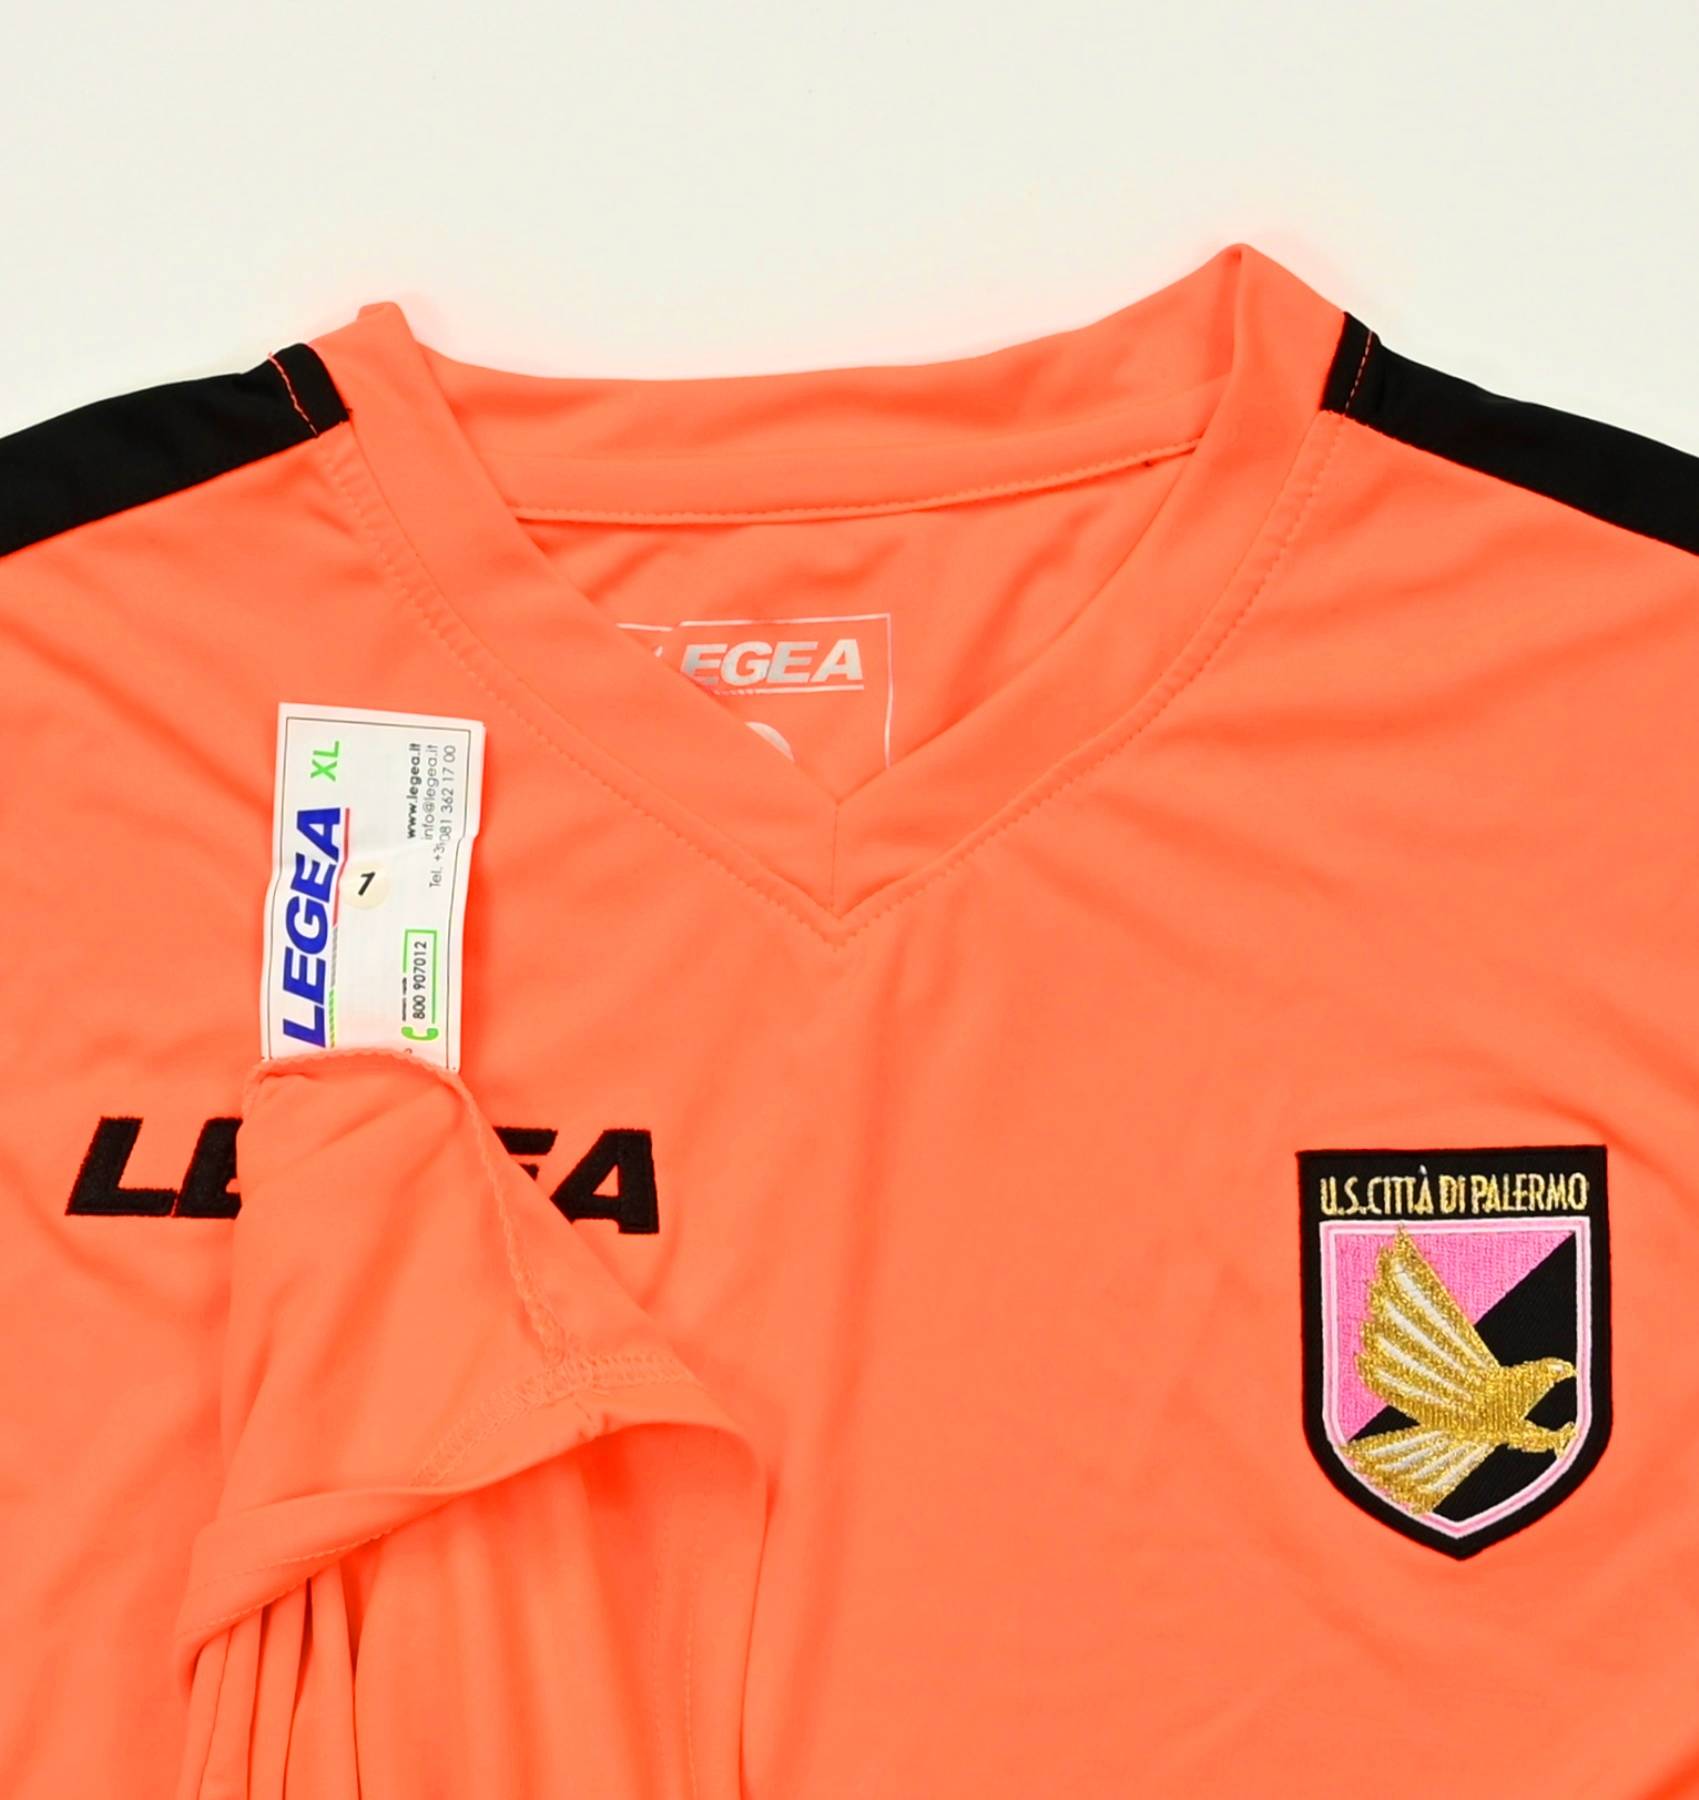 Legea Palermo 2011/12 football shirt 